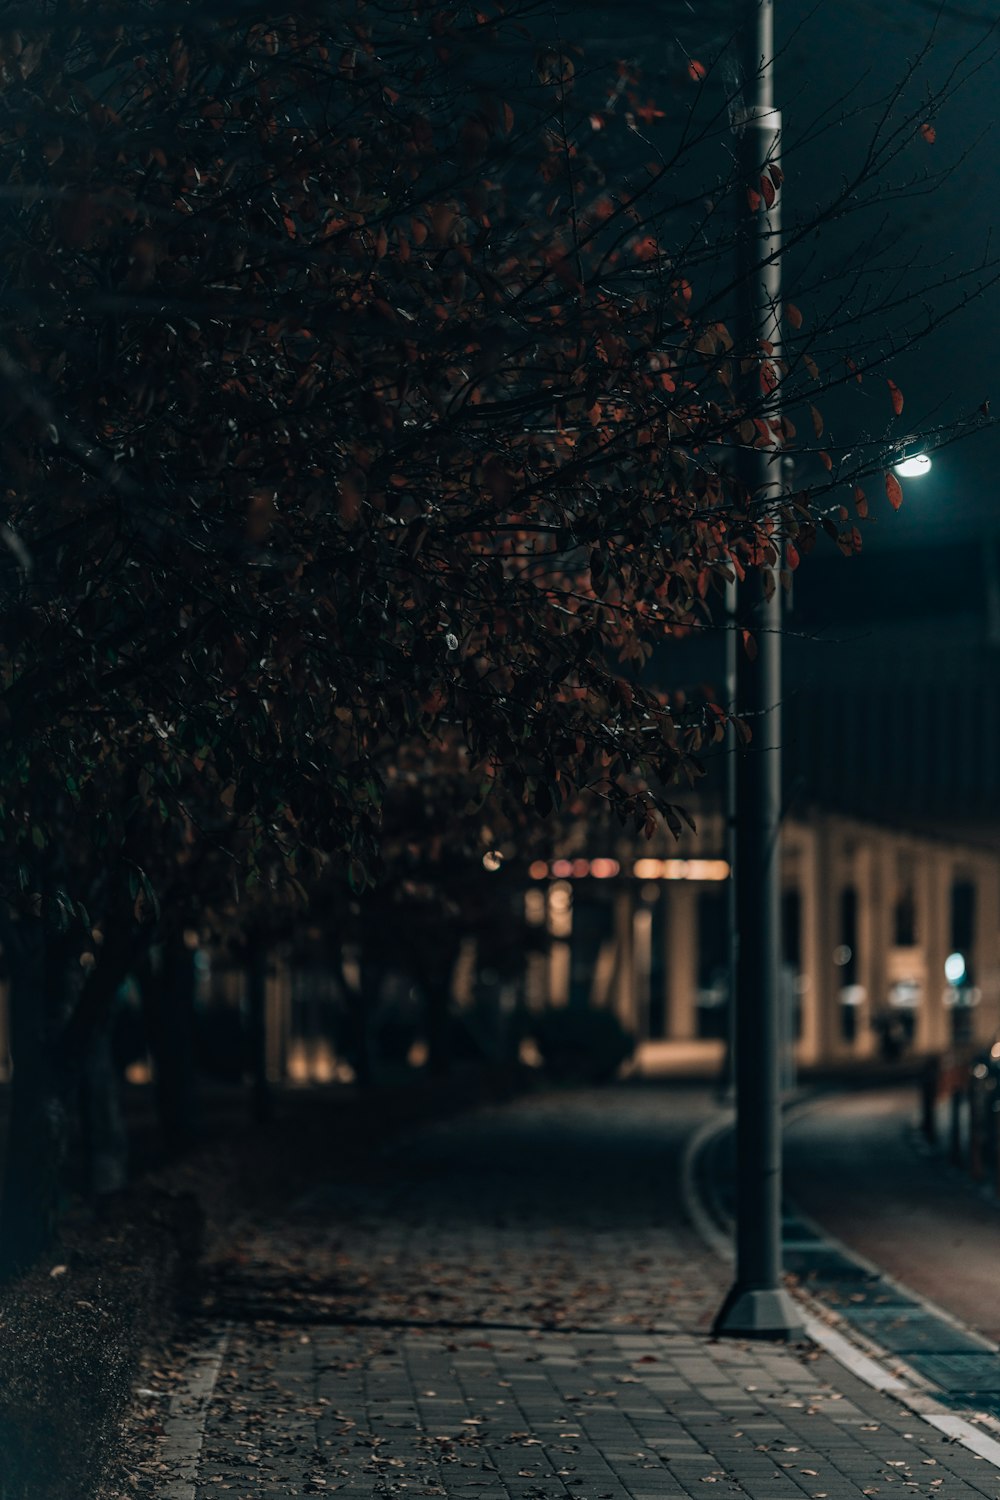 a street light on a city street at night